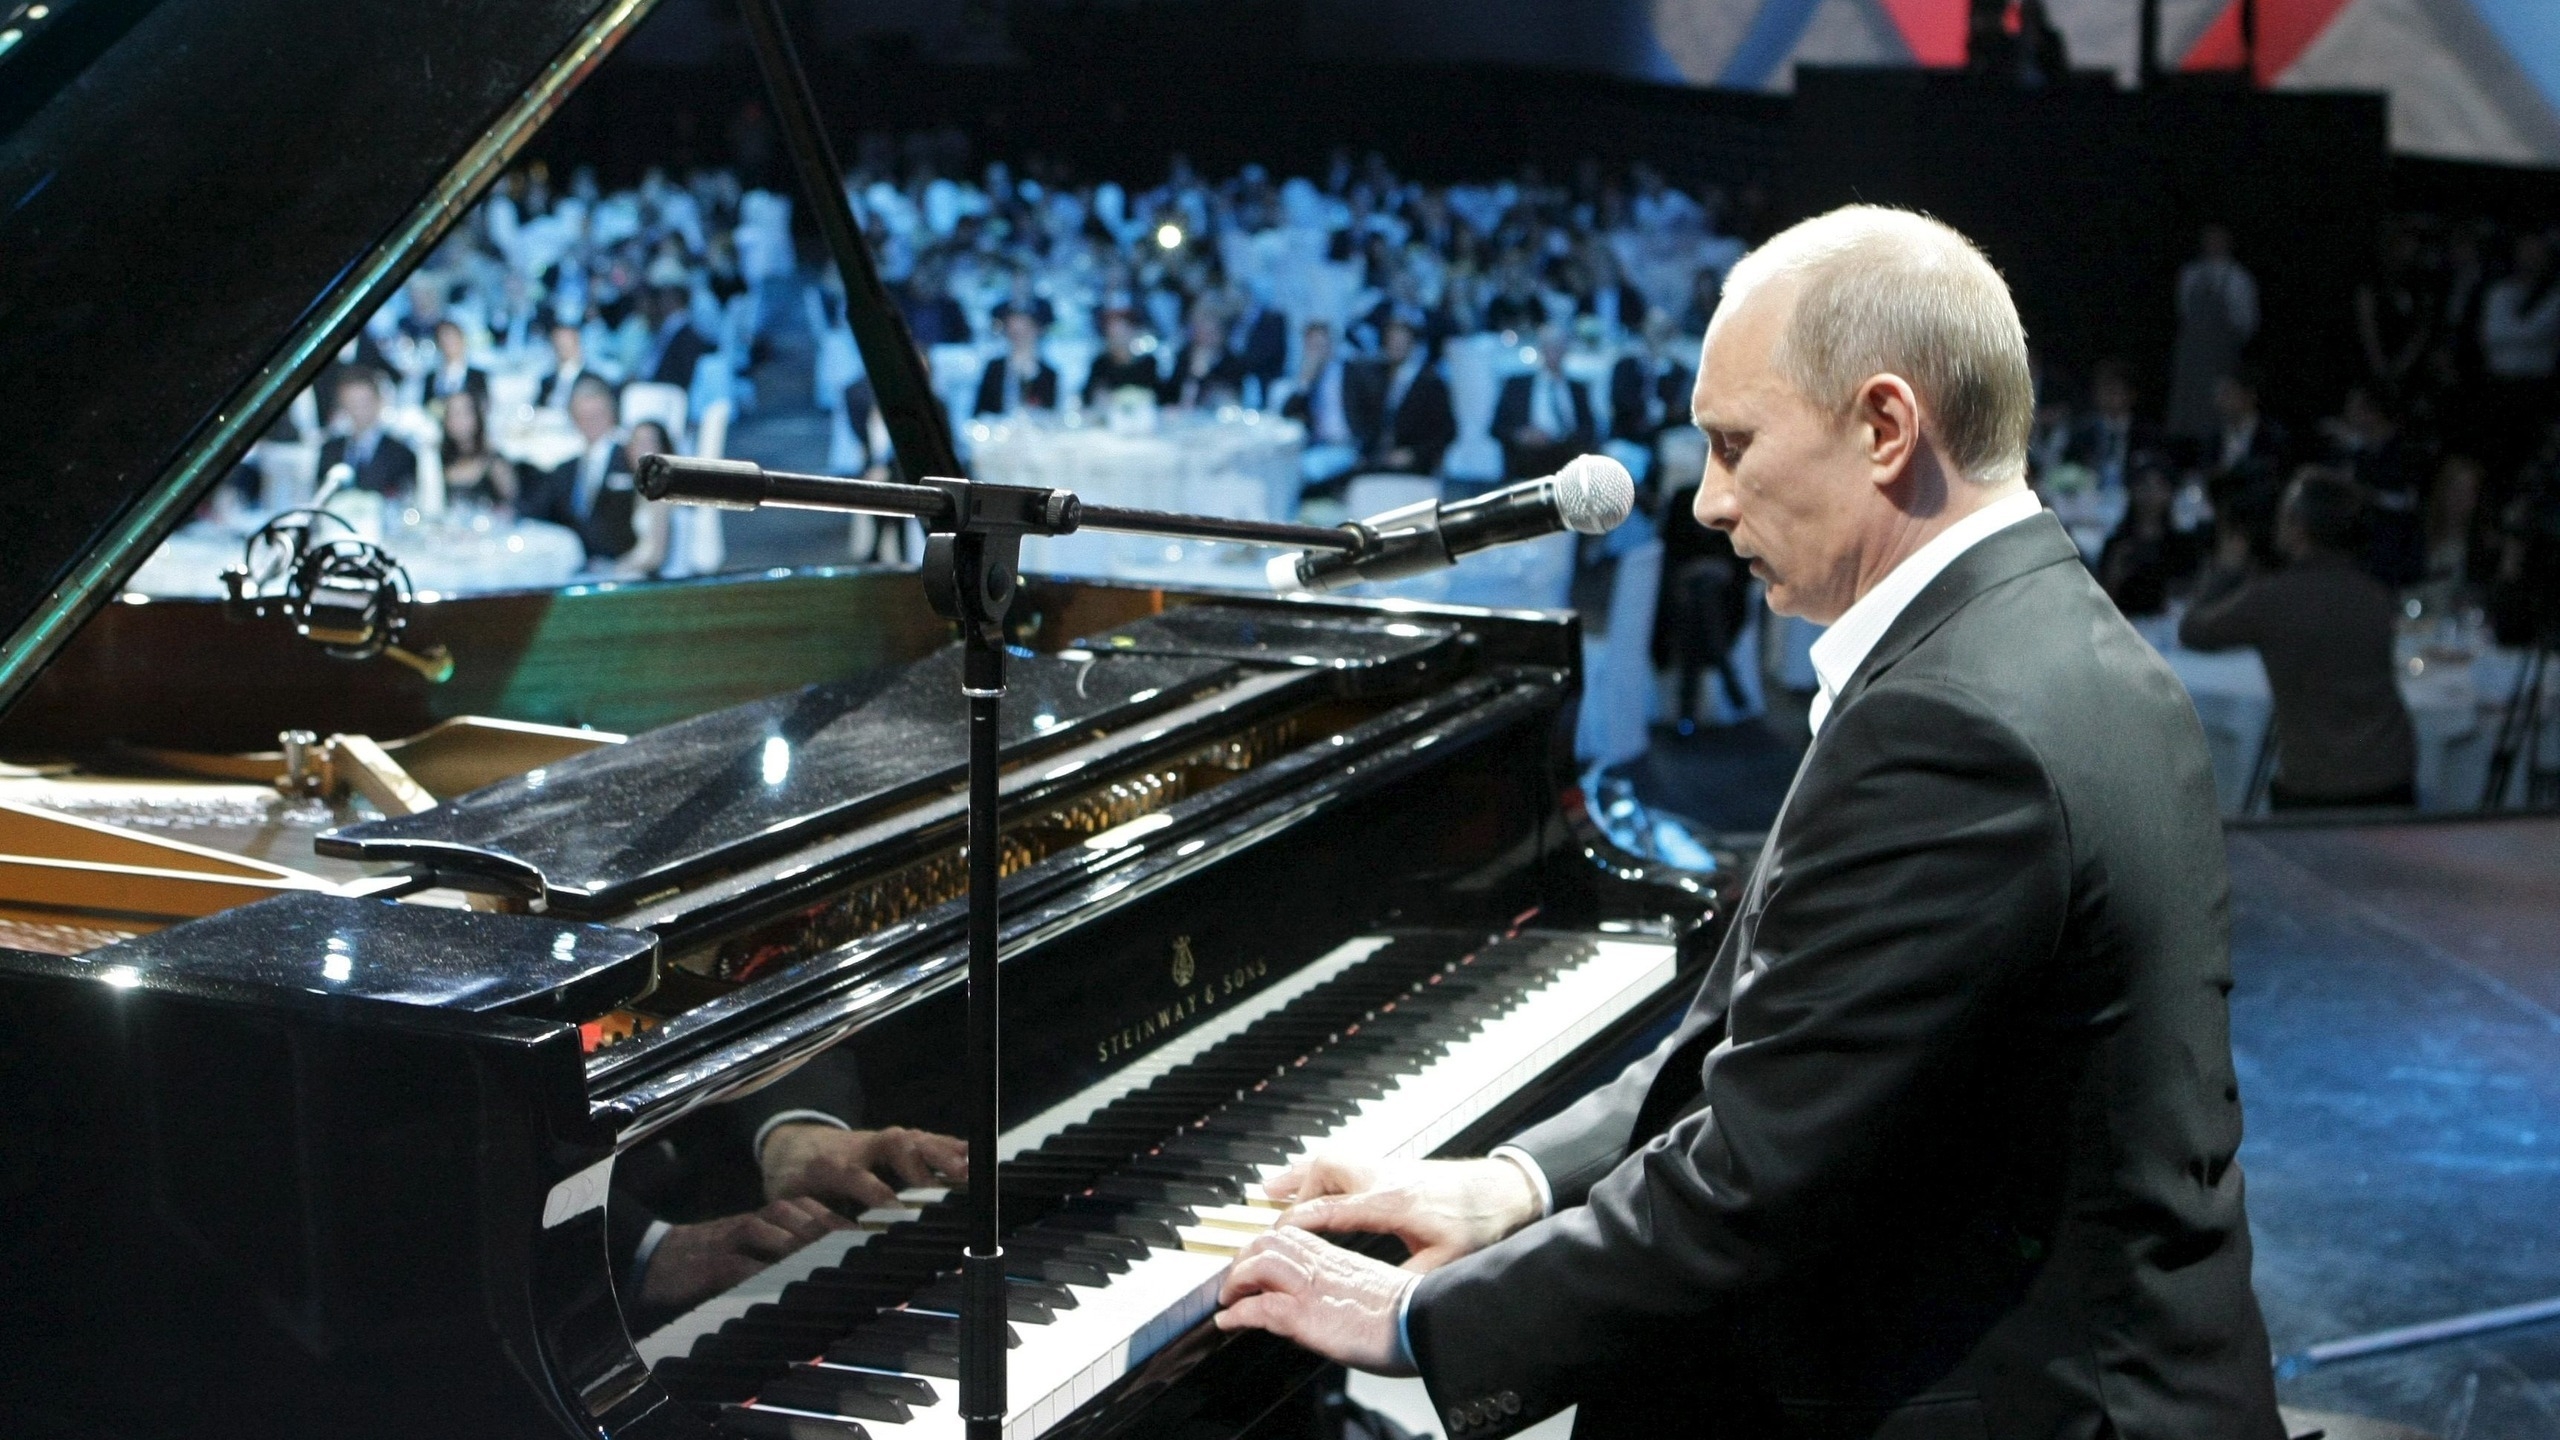 Vladimir Putin Playing Piano for 2560x1440 HDTV resolution